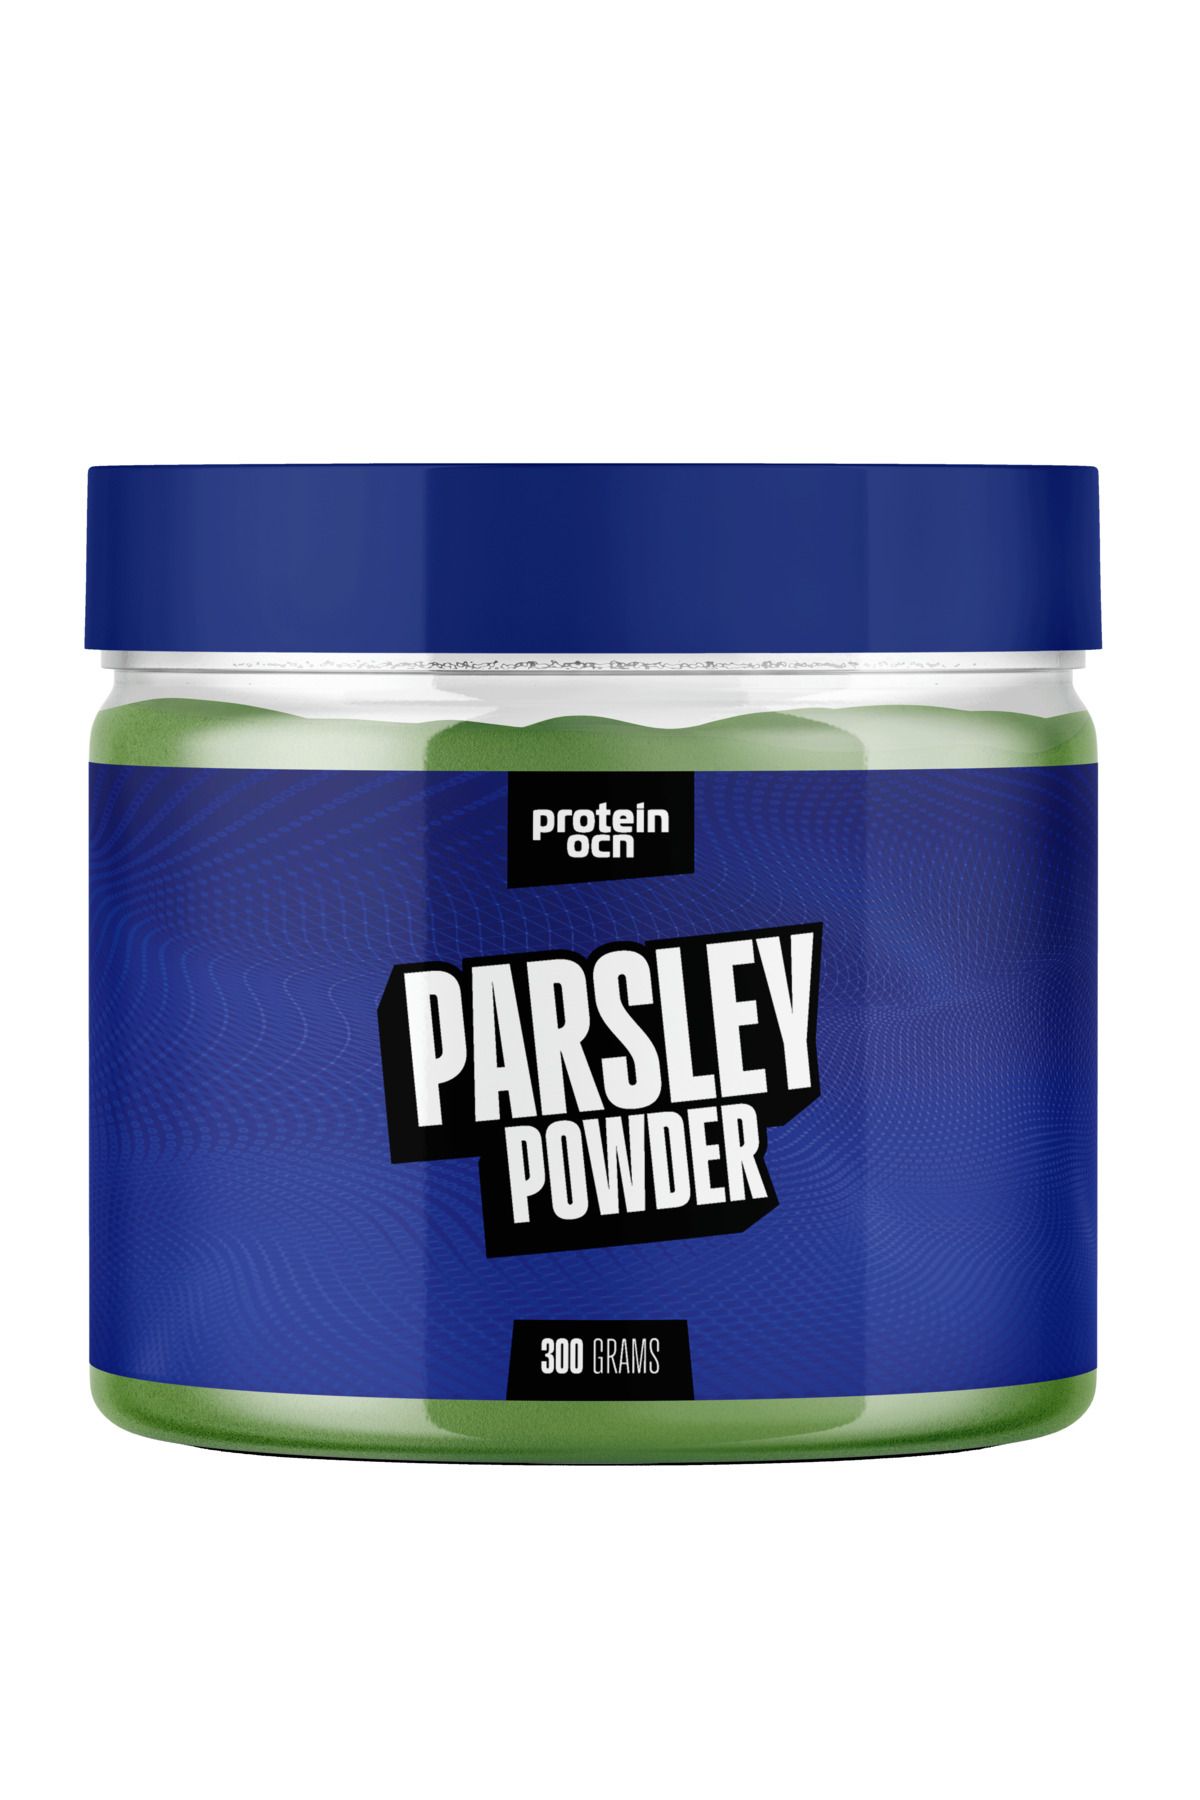 Proteinocean Parsley Powder 300 g 30 Servis